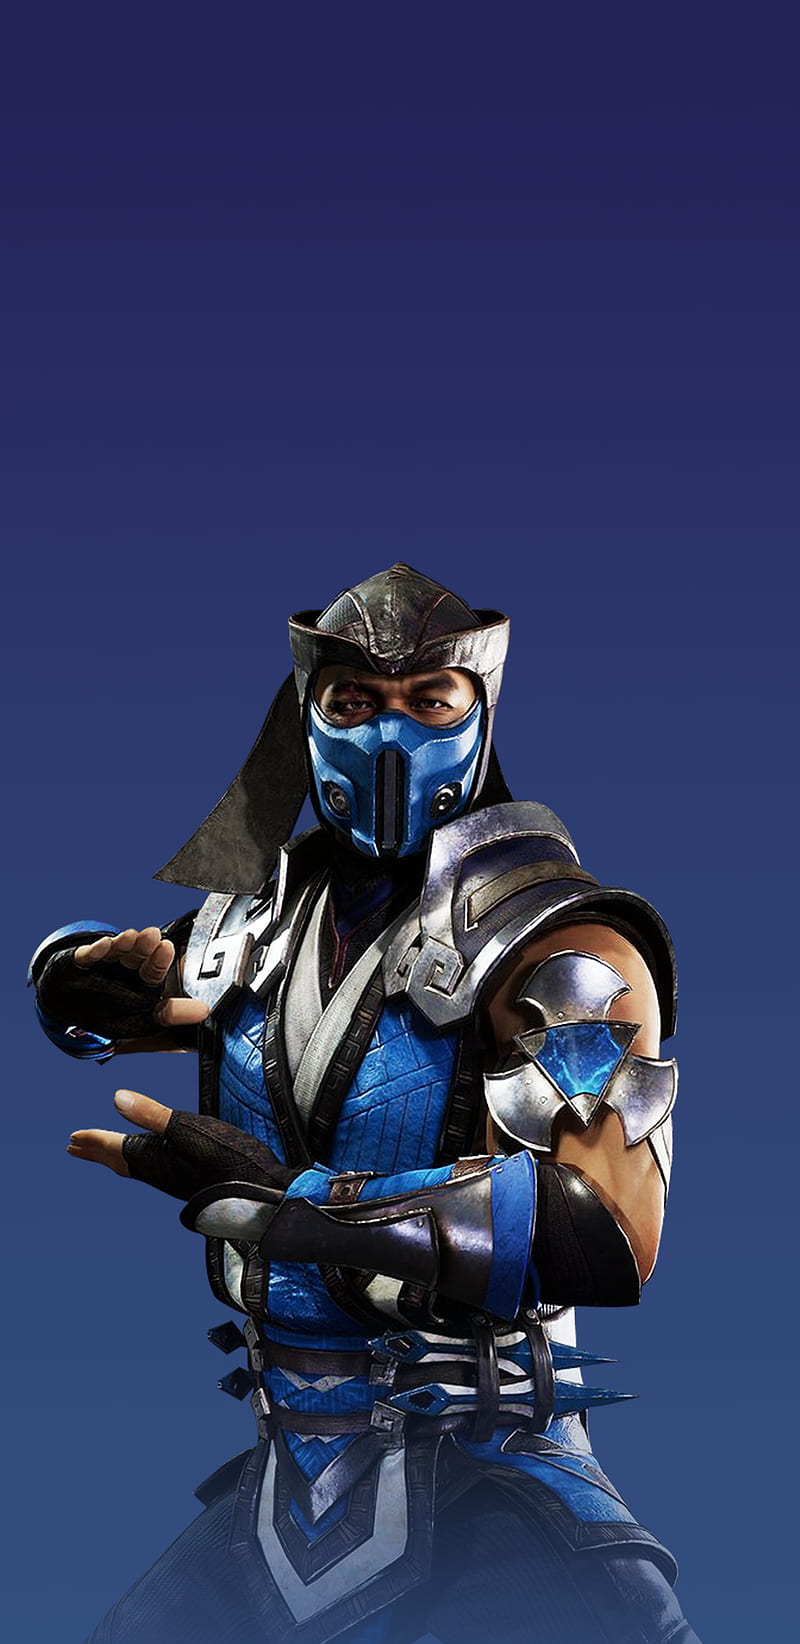 Mortal Kombat Mobile on X: Savagery is no match for skill. #Wallpaper  #SubZero #MK11 #MKmobile  / X